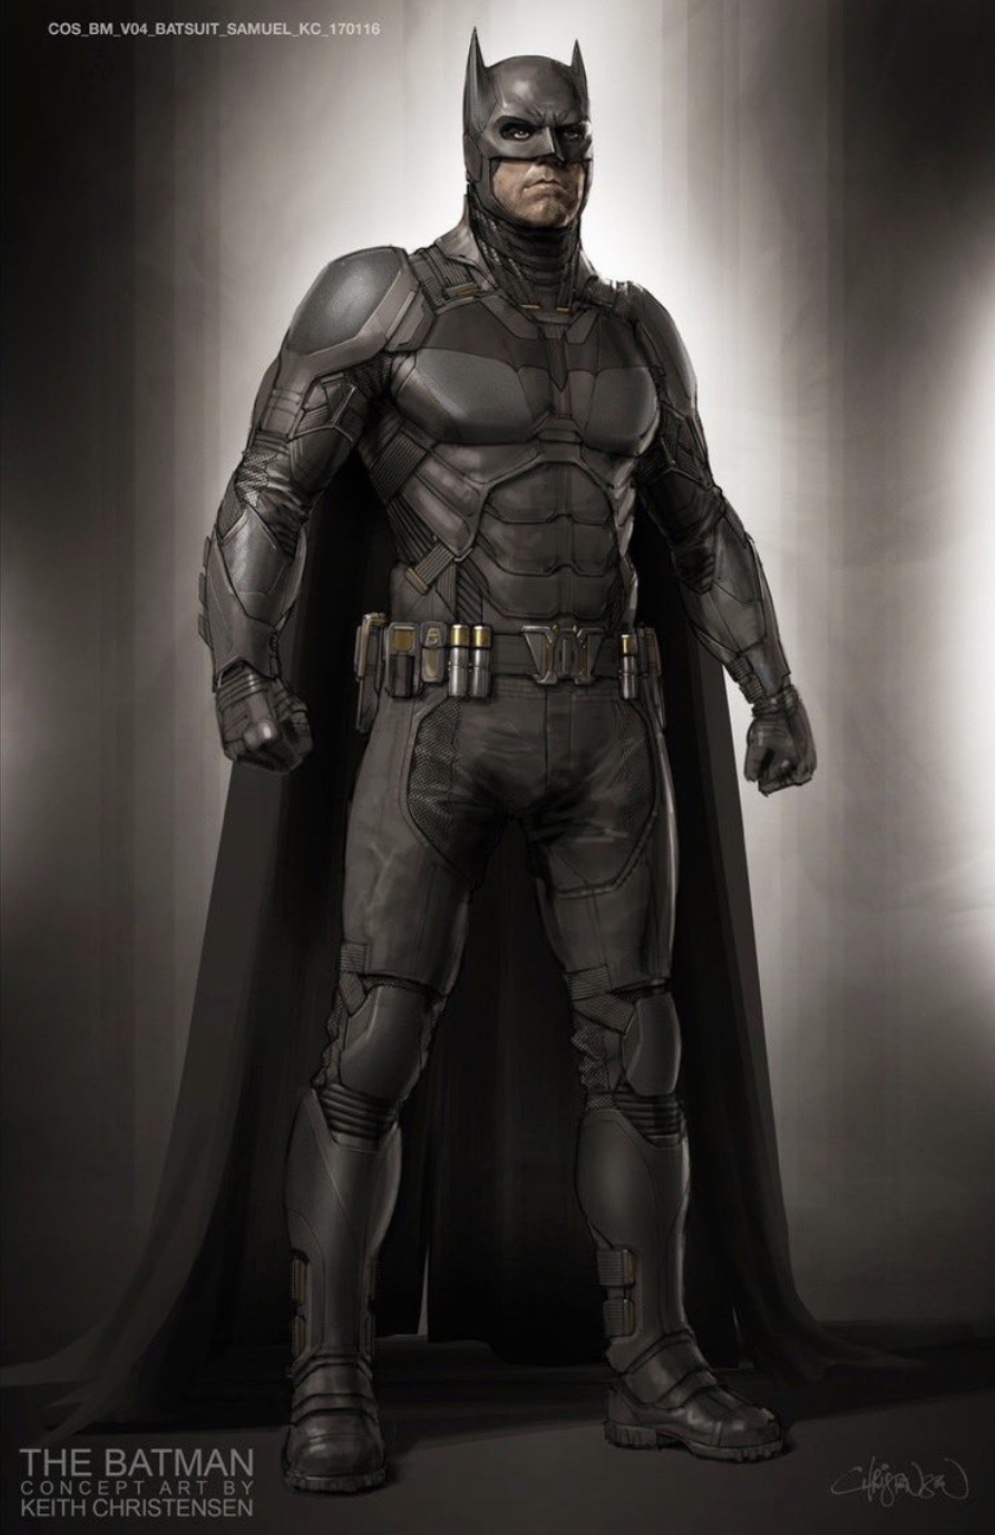 Batfleck Movie Concept Art of Batman Suit by TytorTheBarbarian on DeviantArt